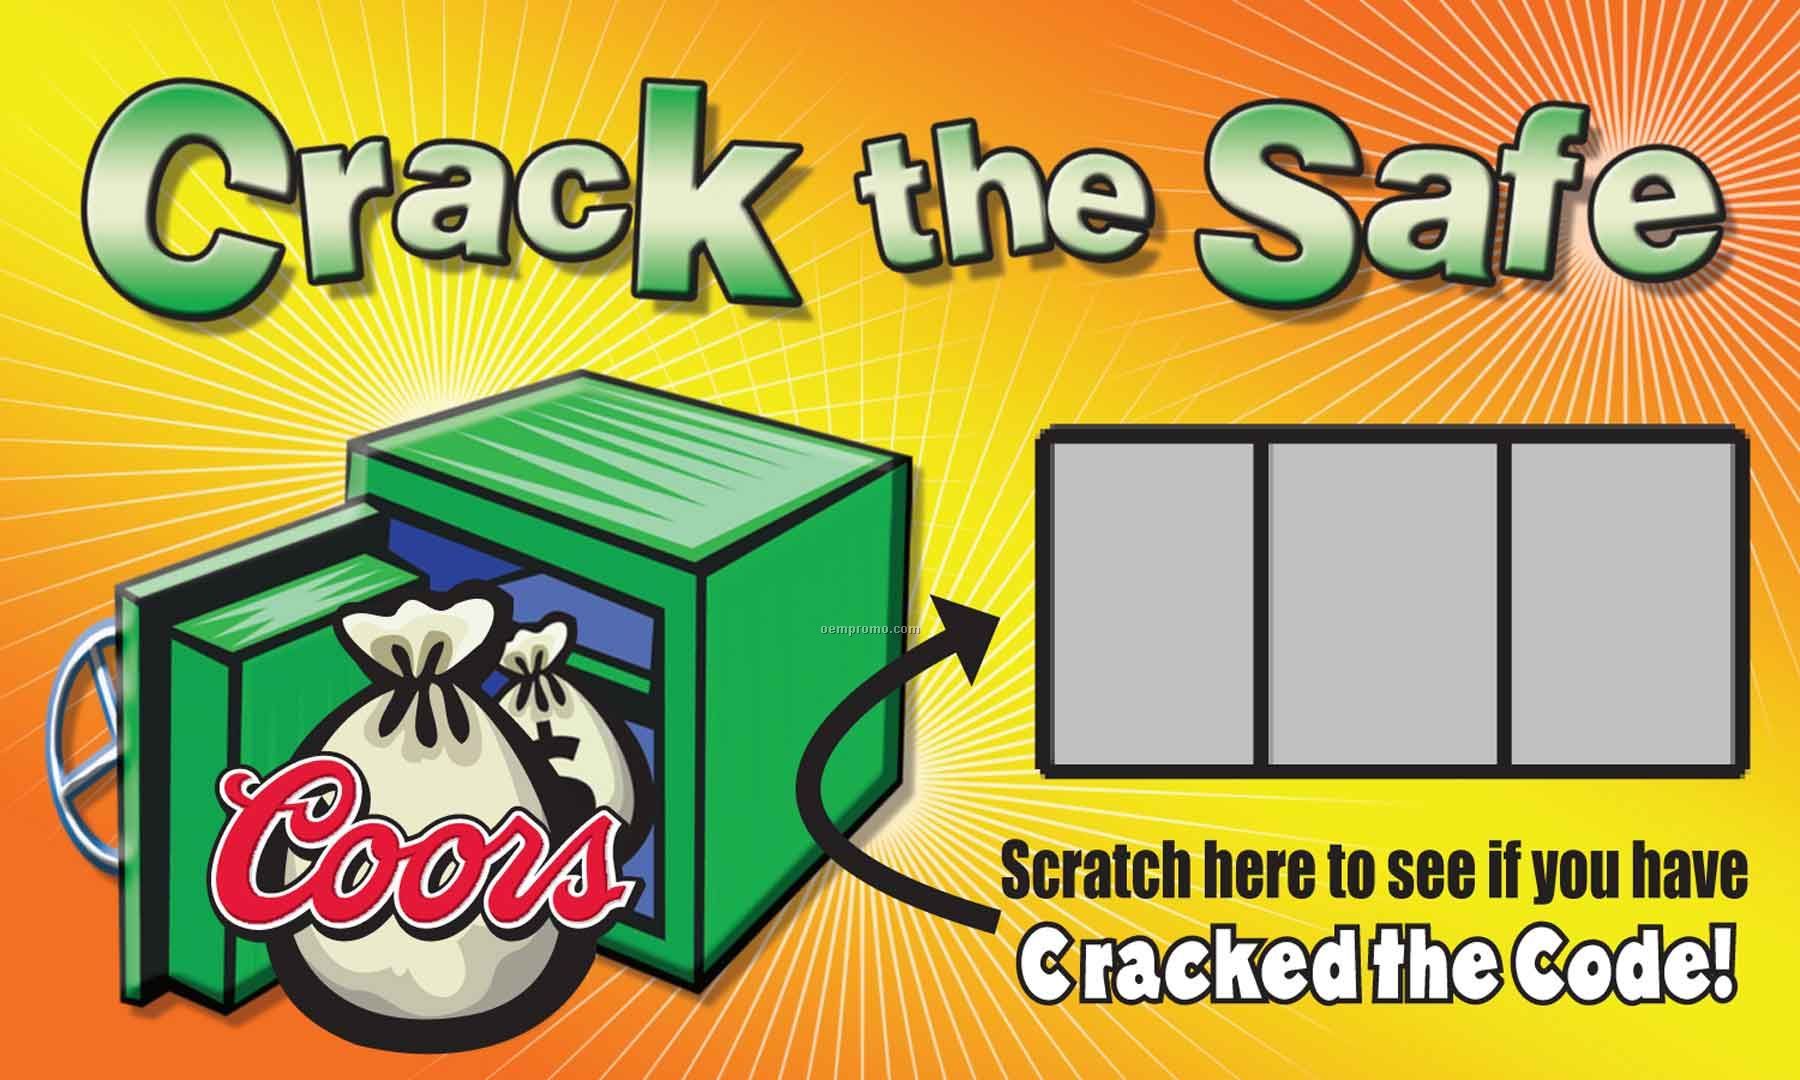 Scratch Off Cards - Crack The Safe (3"X5")